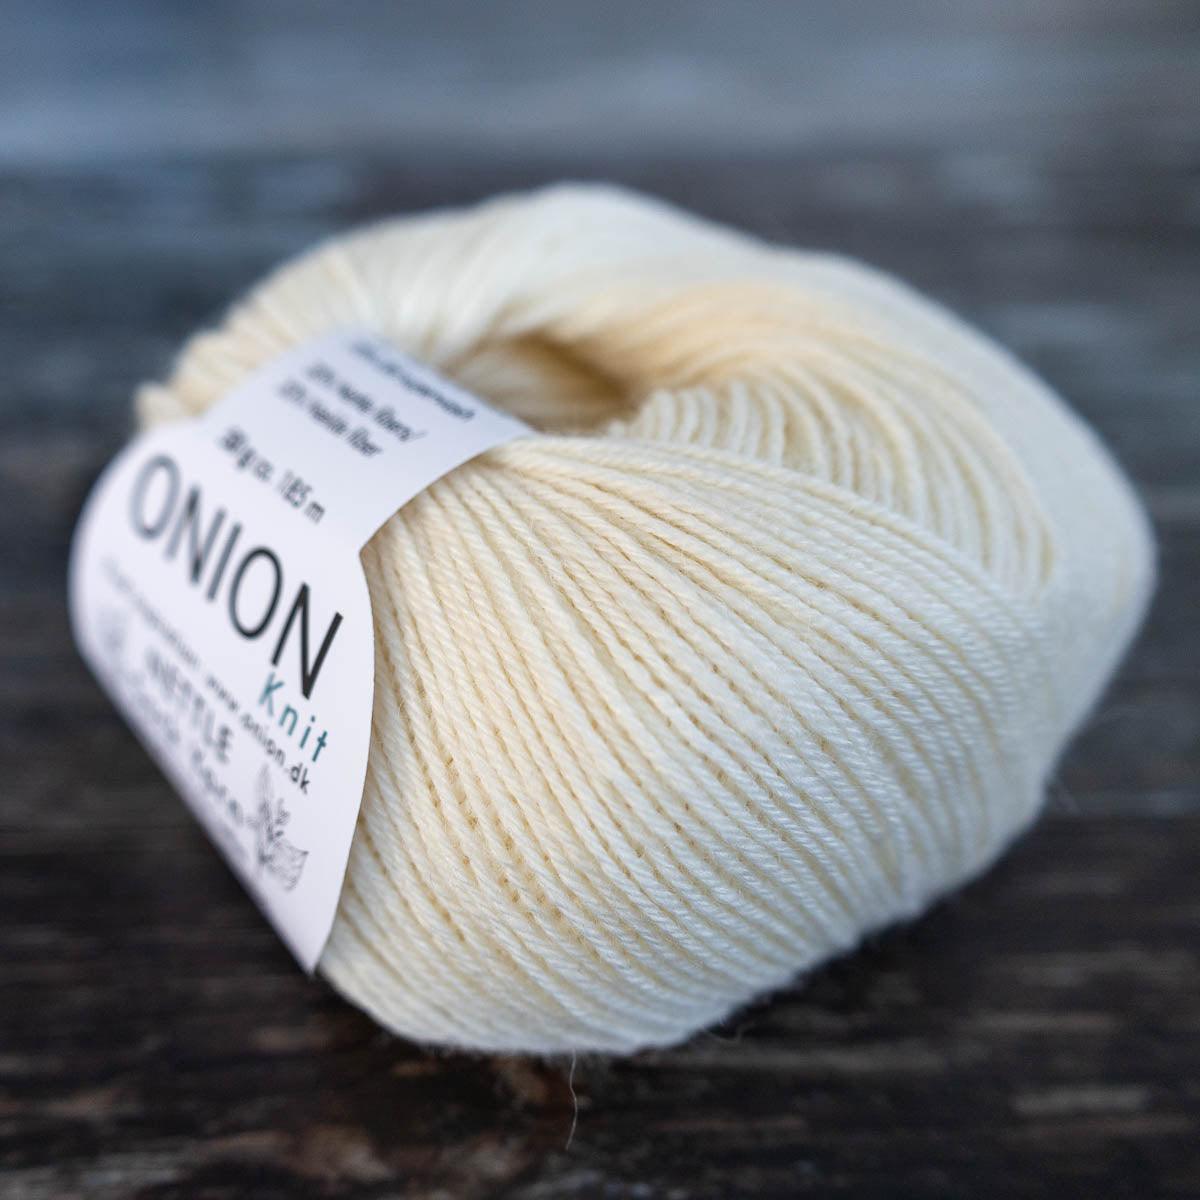 Onion Onion Nettle Sock Yarn - 1001 råhvid - Yarn